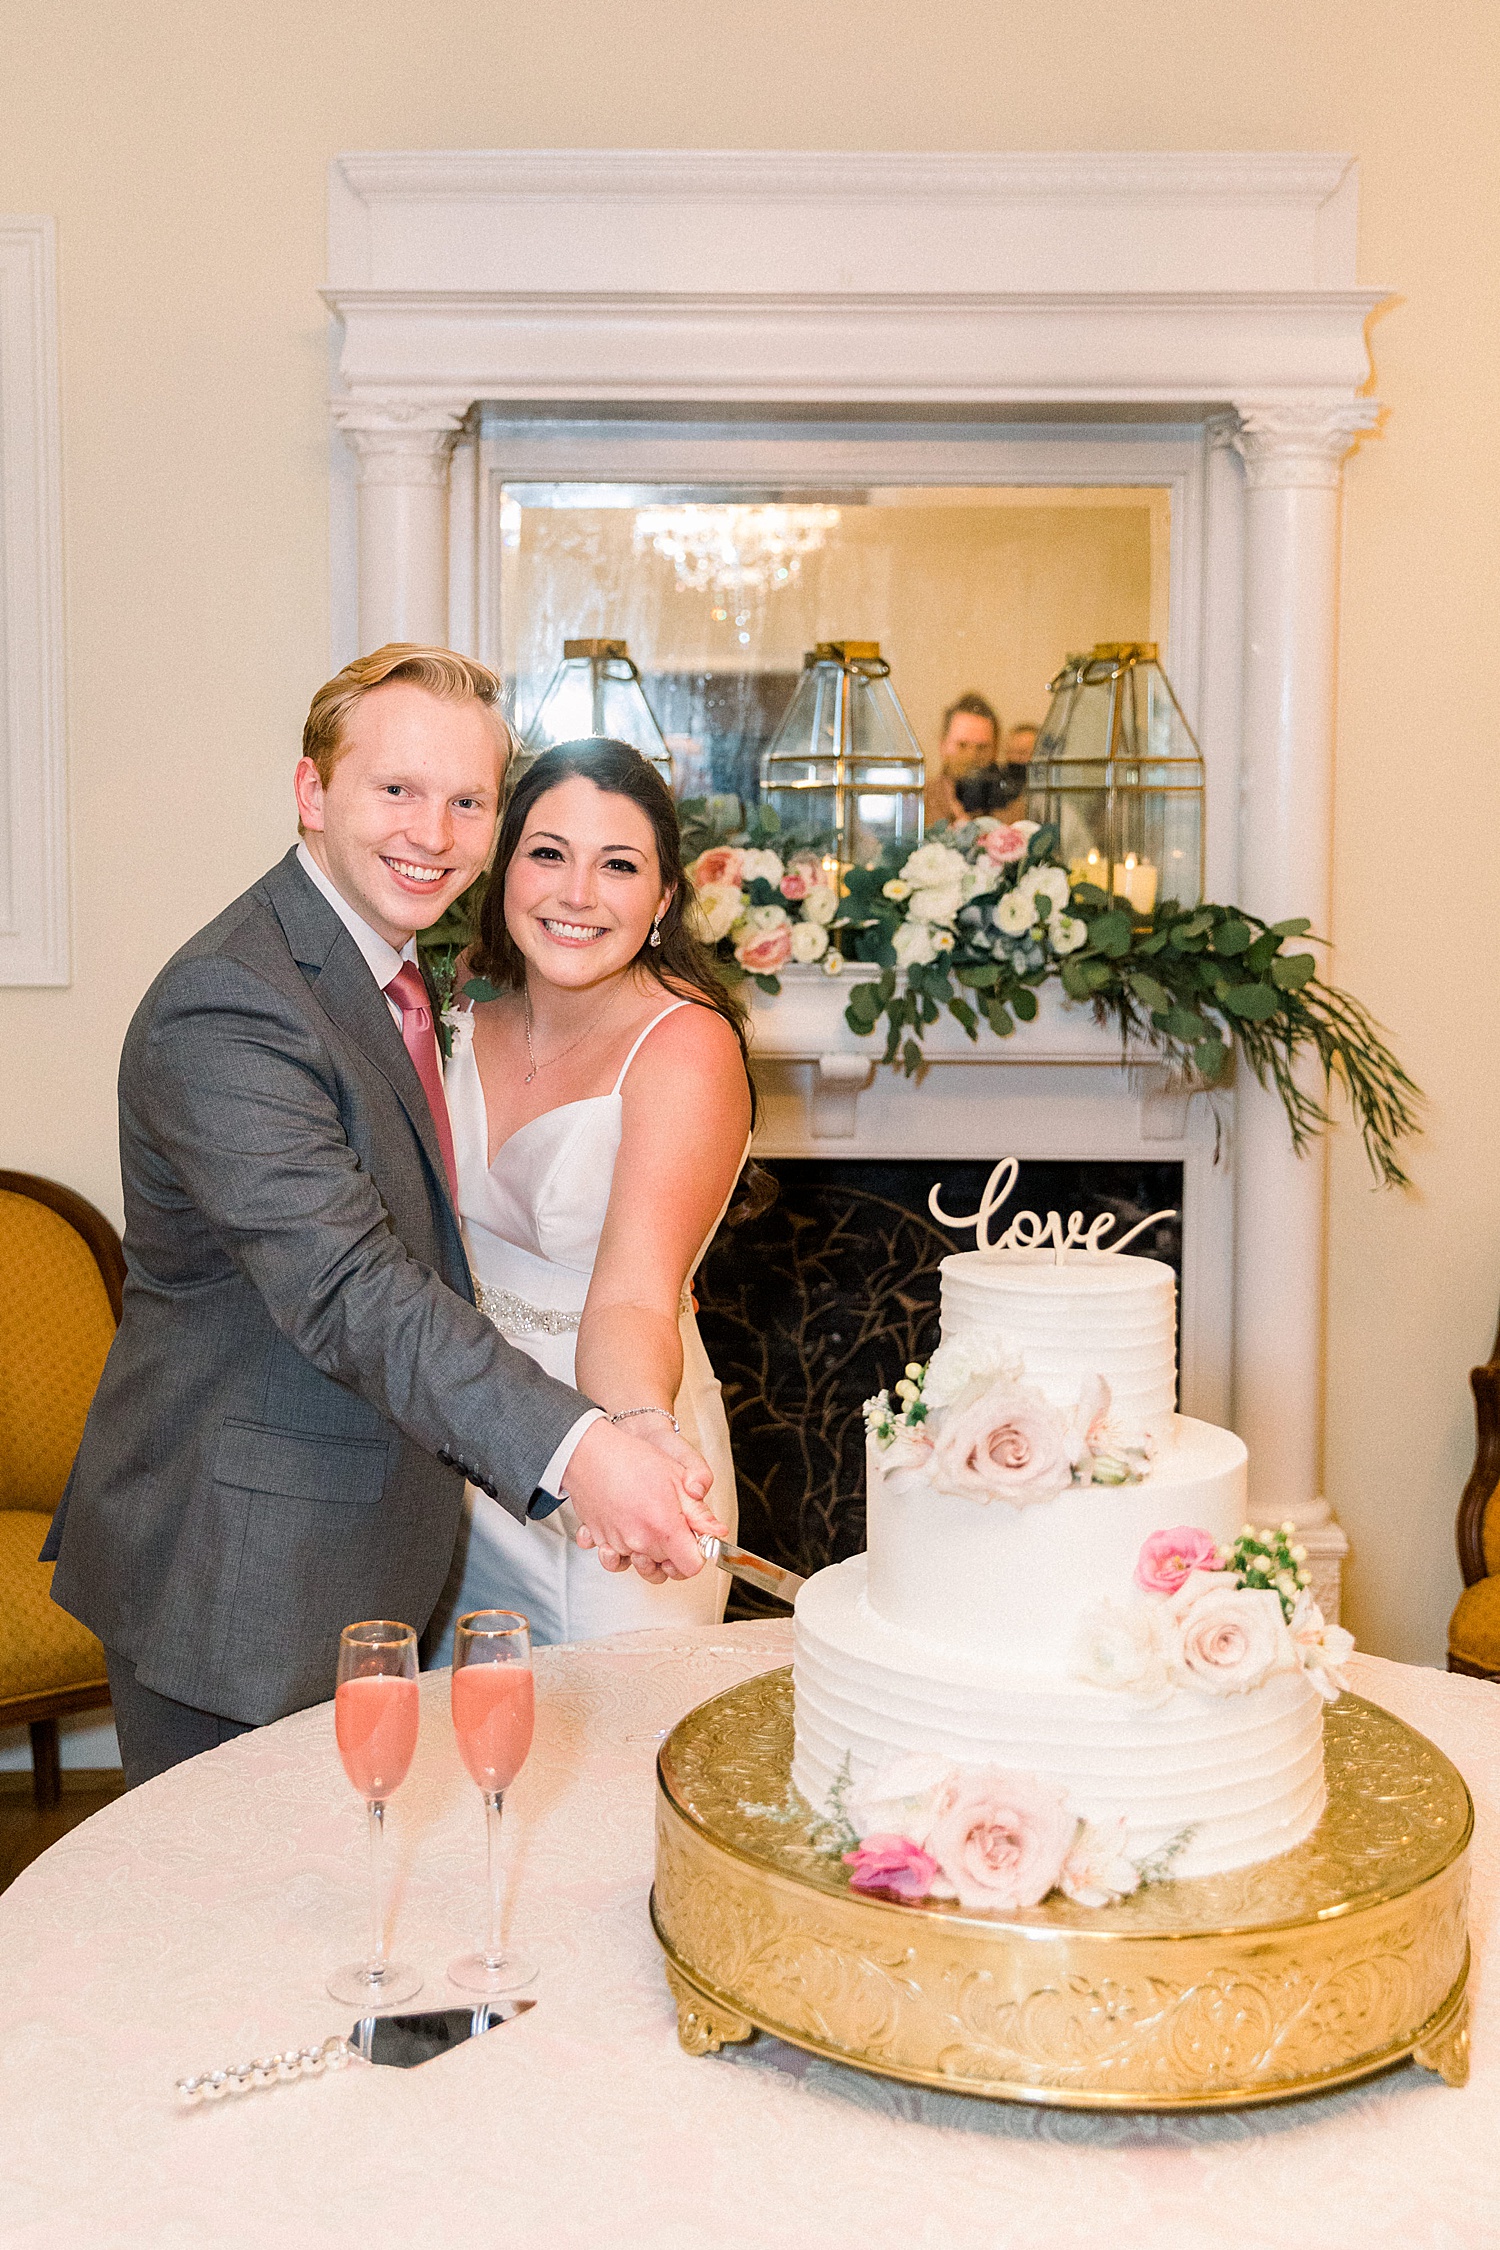 husband and wife cut their wedding cake